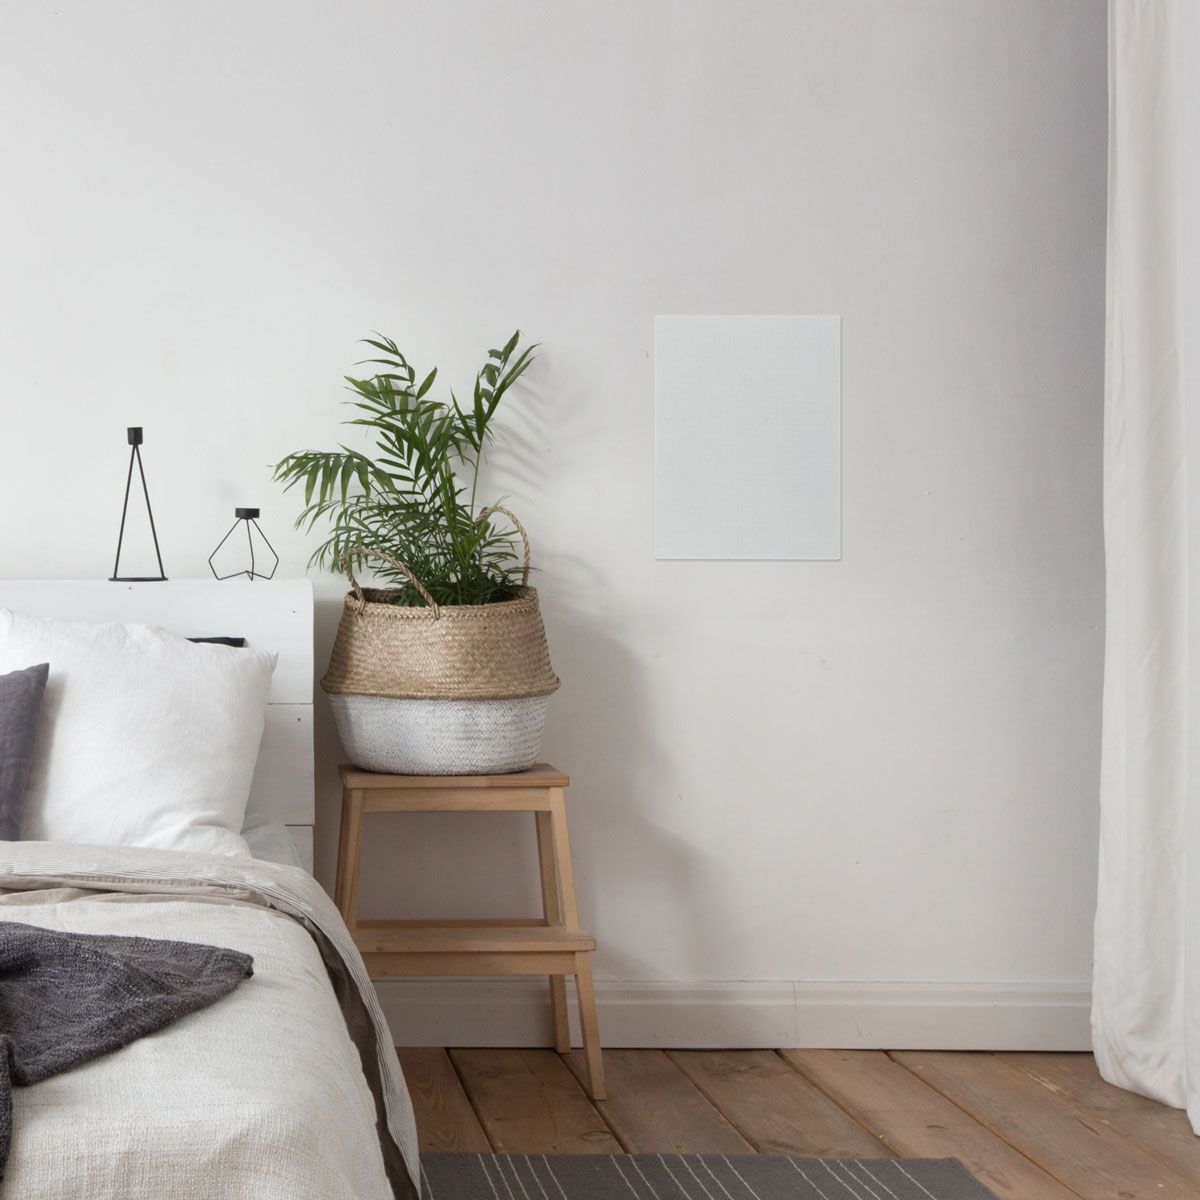 MartinLogan Motion MW6 In-Wall Speaker, mounted in bedroom wall